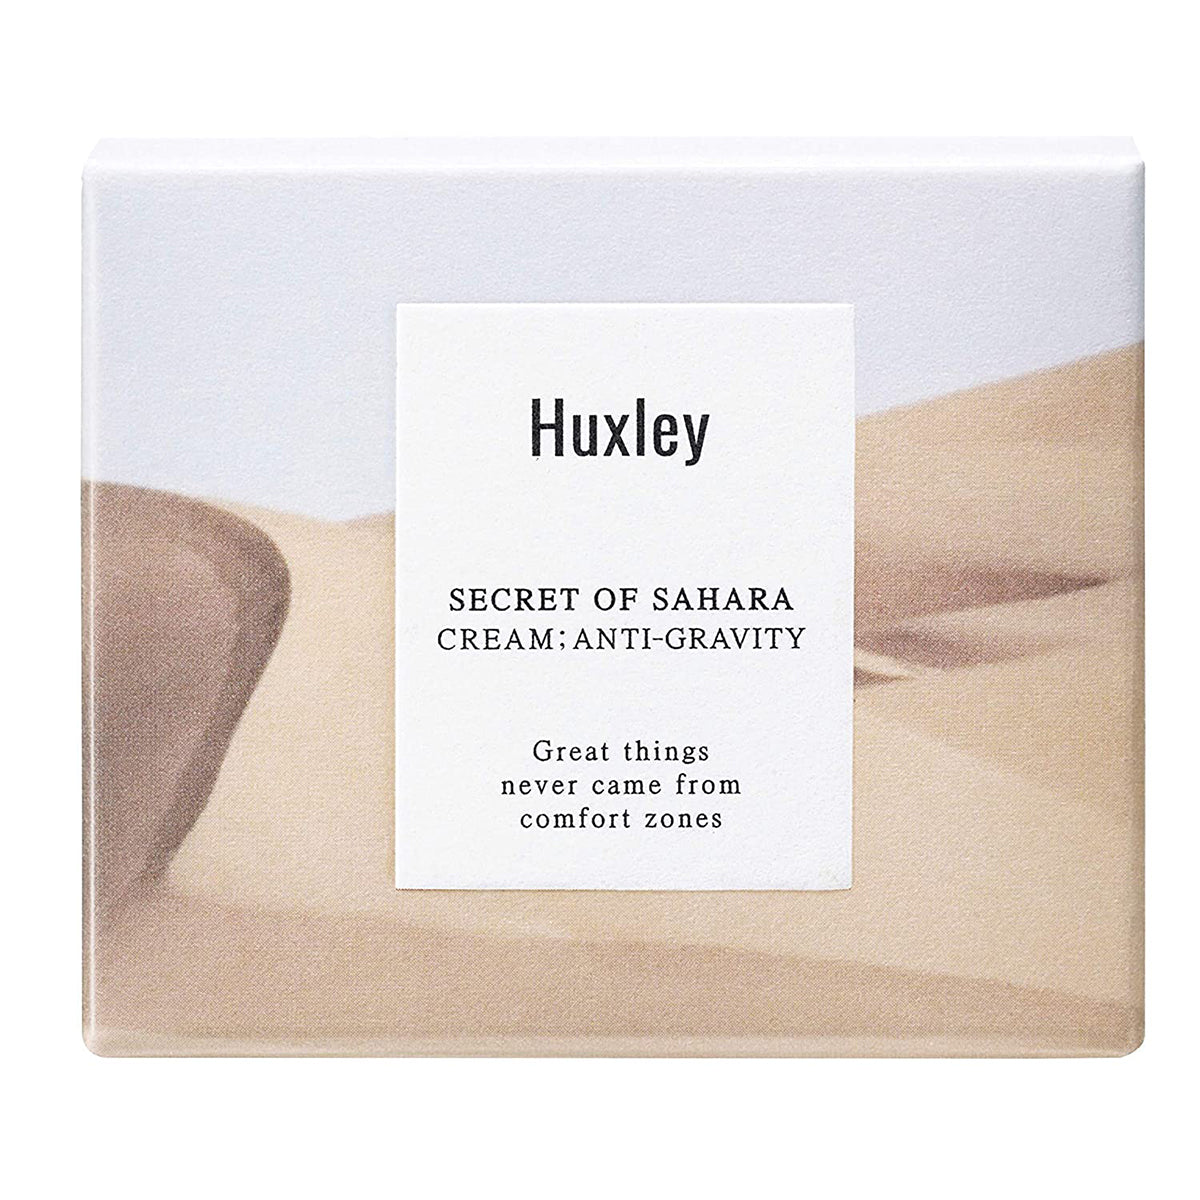 [ Huxley ] Secret of Sahara Cream ; Anti-Gravity, 50ml / 1.69 fl oz.